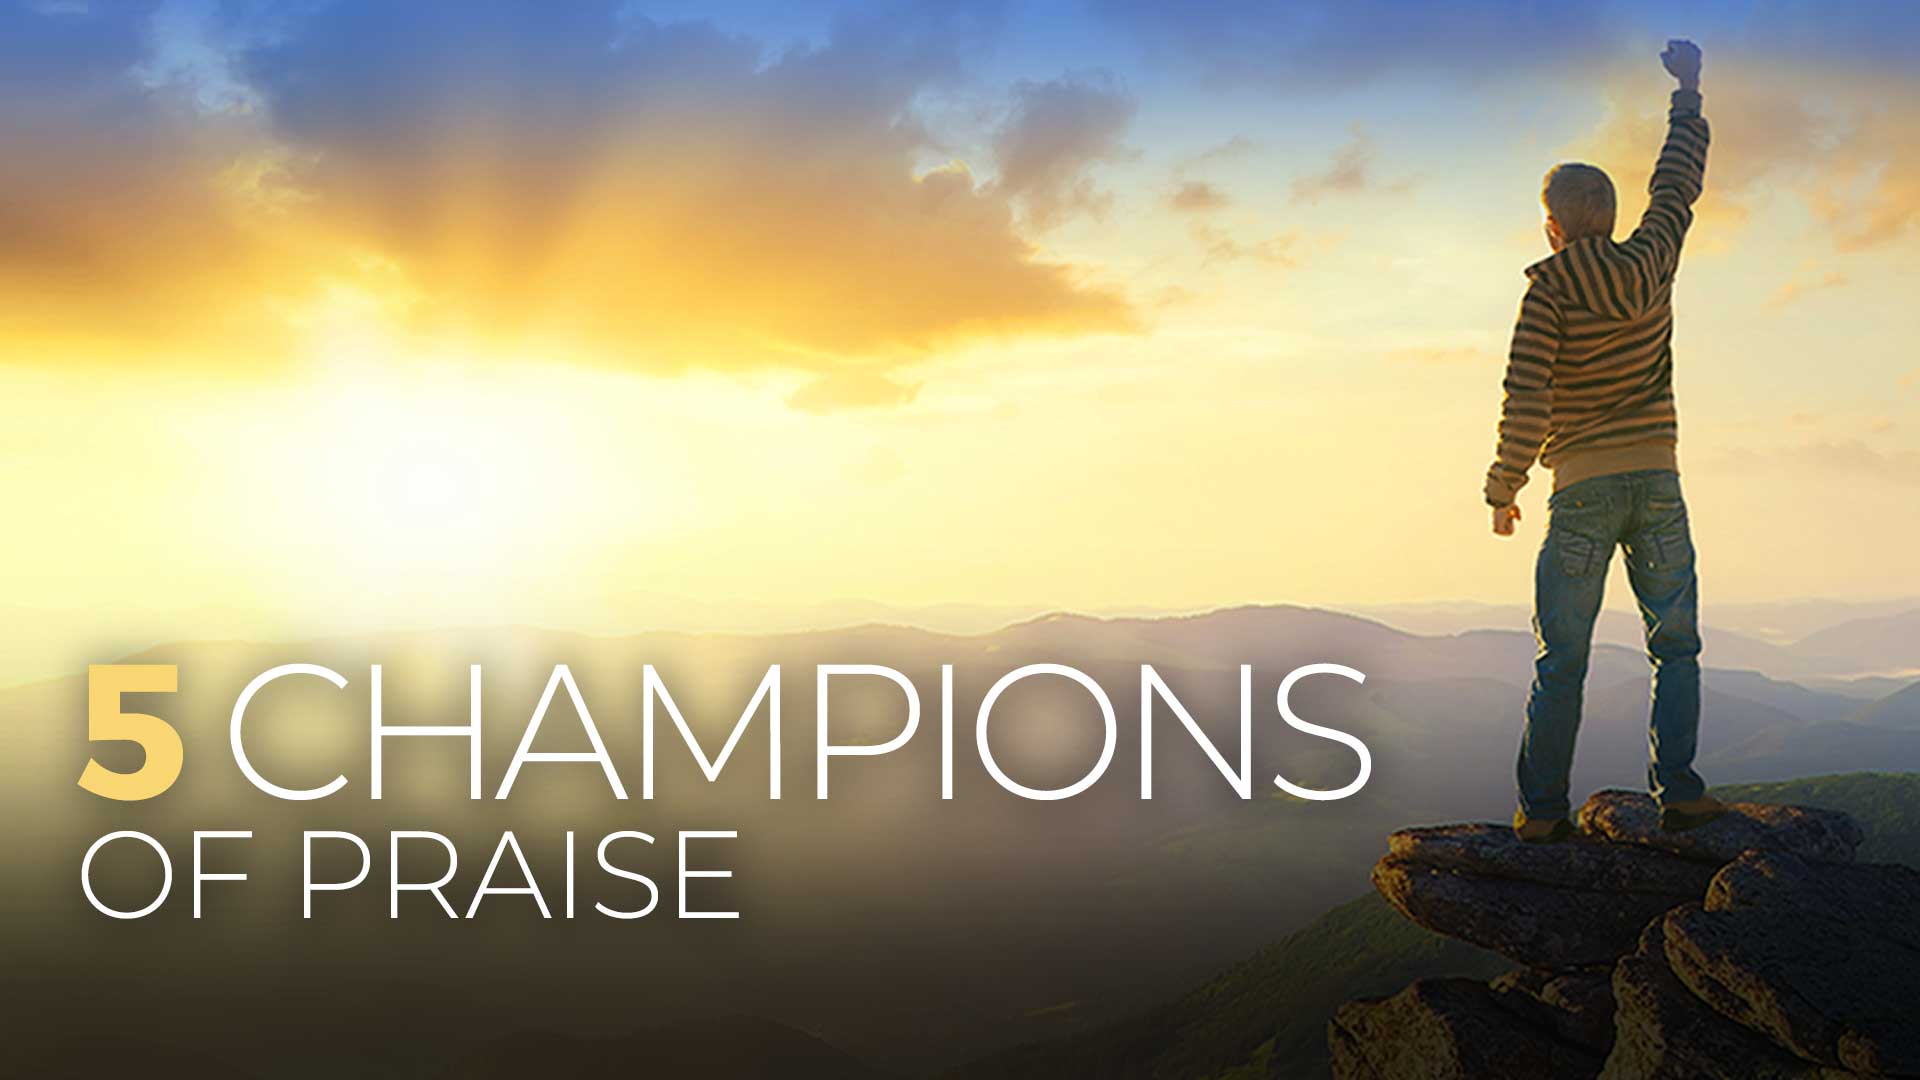 5 Champions of Praise 1920x1080